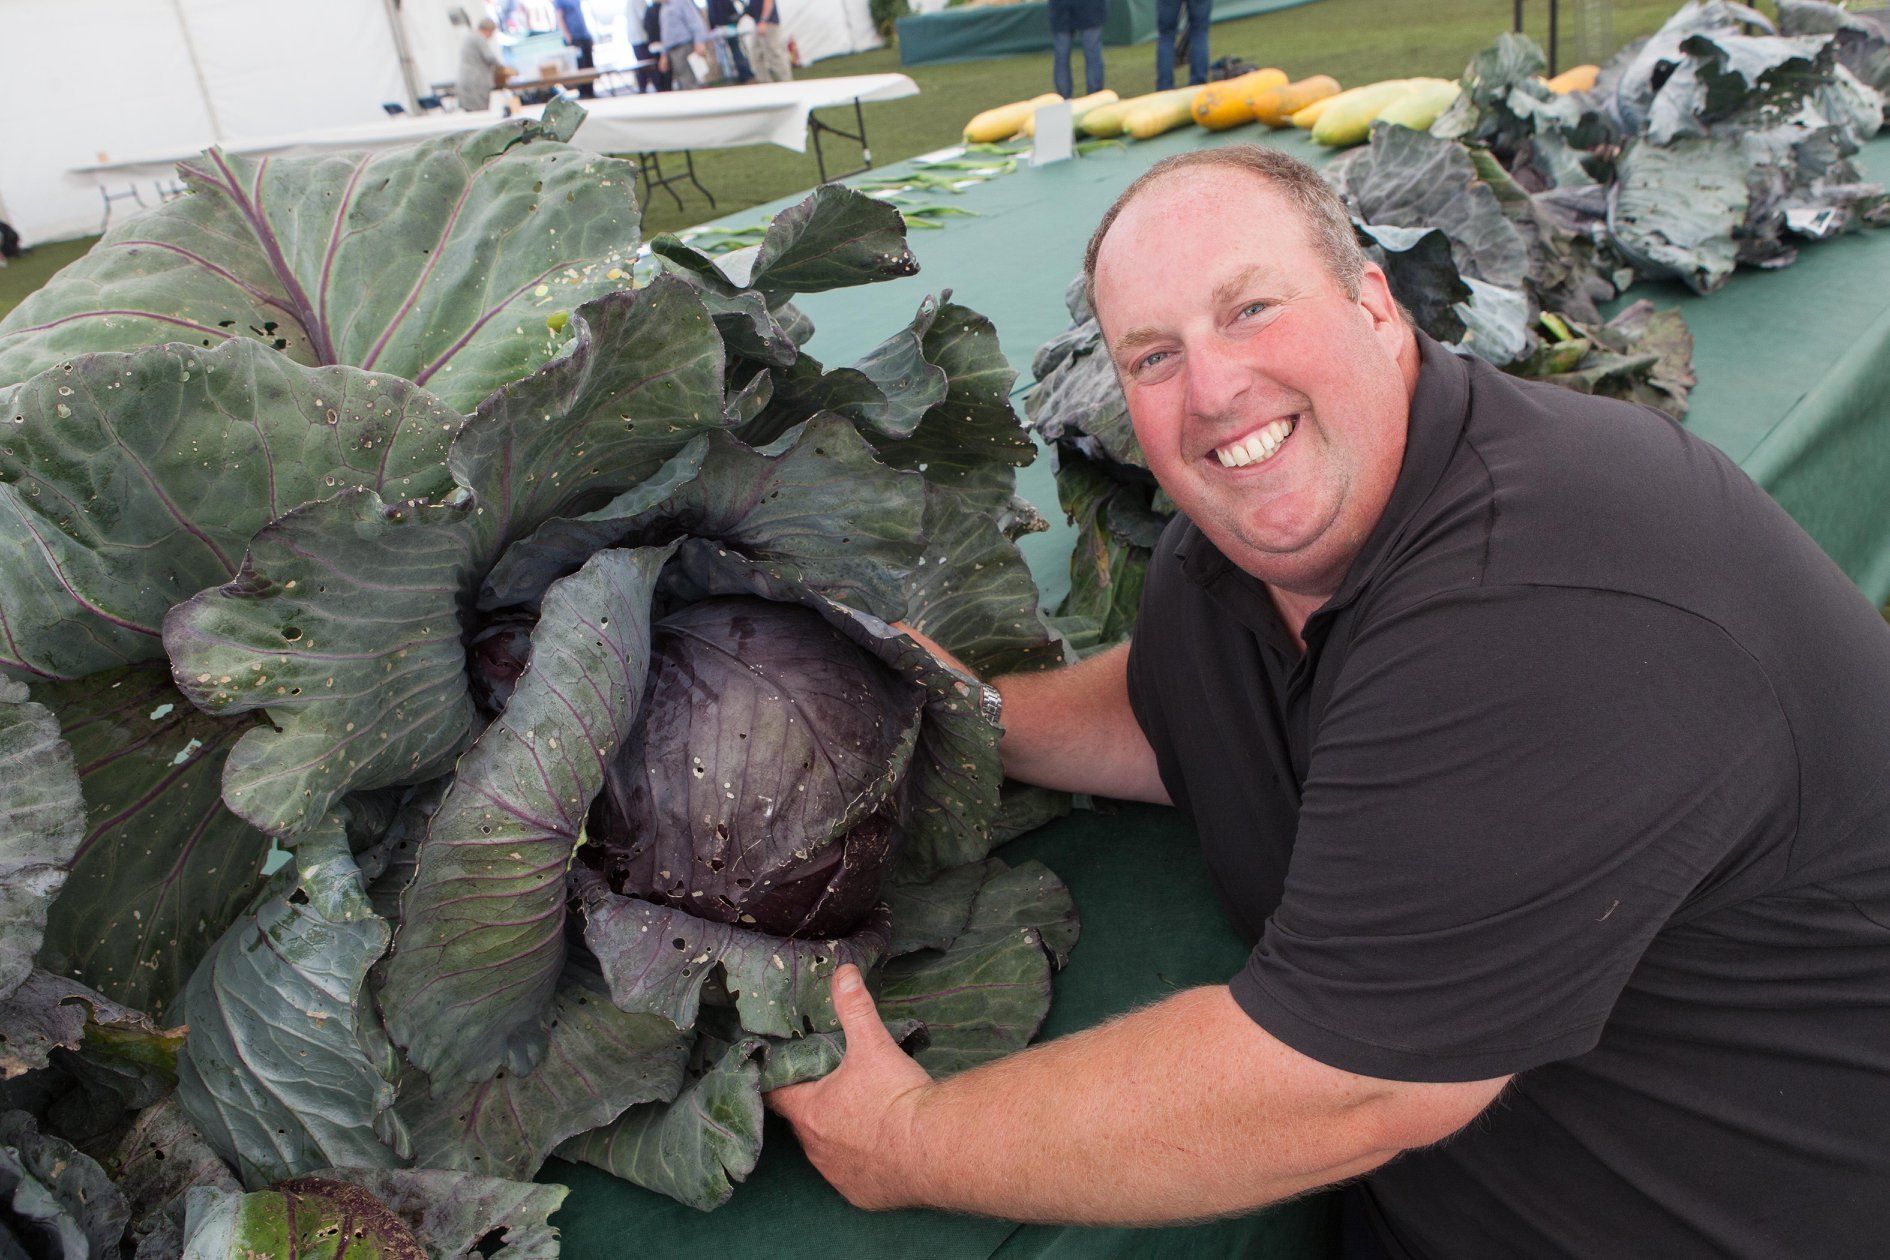 Heaviest red cabbage world record: Tim Saint